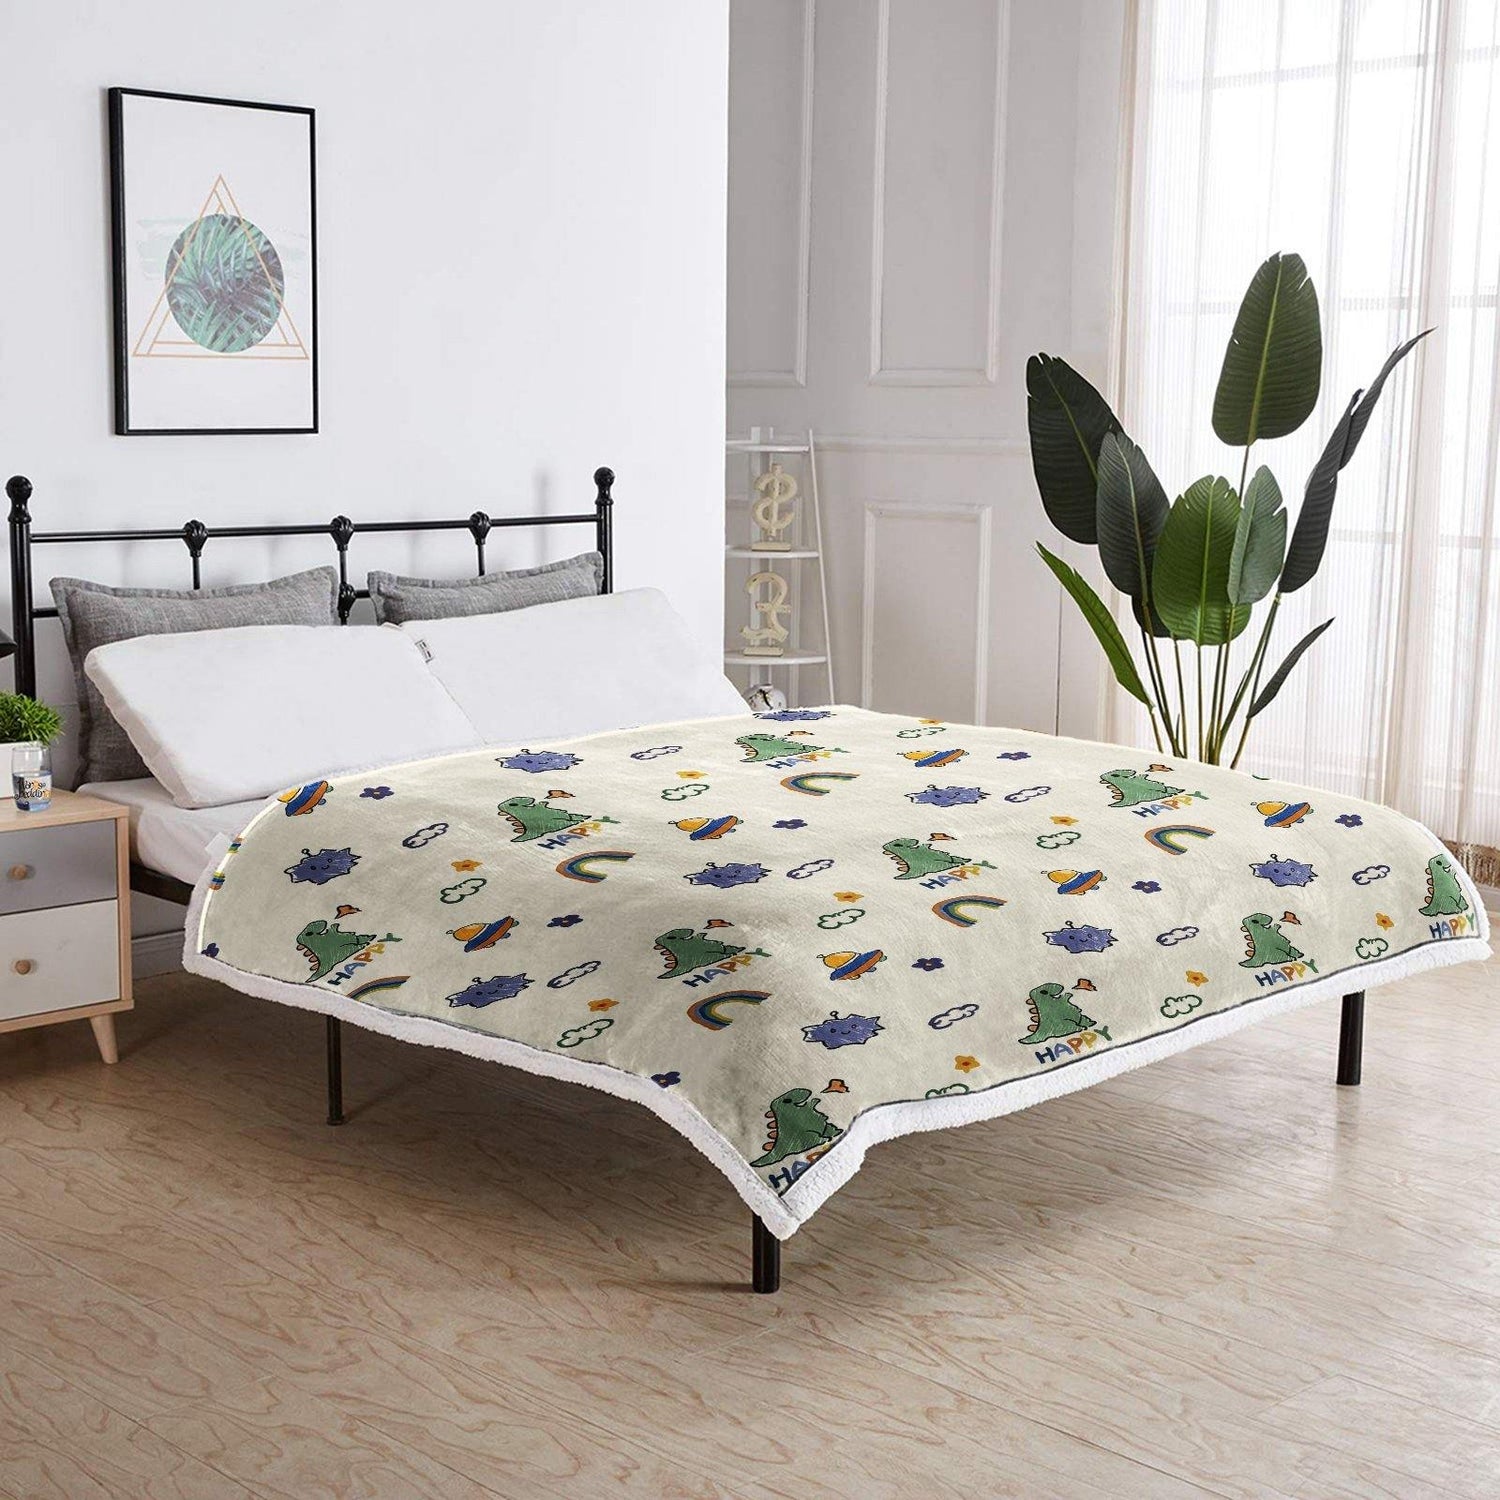 WONGS BEDDING Little Dinosaur Collection Blanket - Wongs bedding